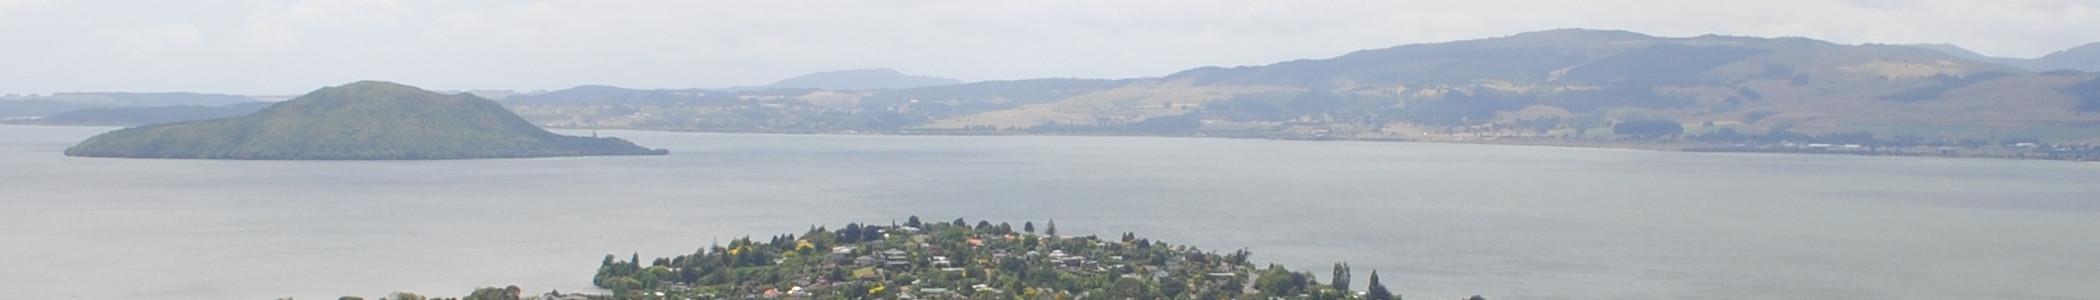 Banner image for Rotorua on GigsGuide